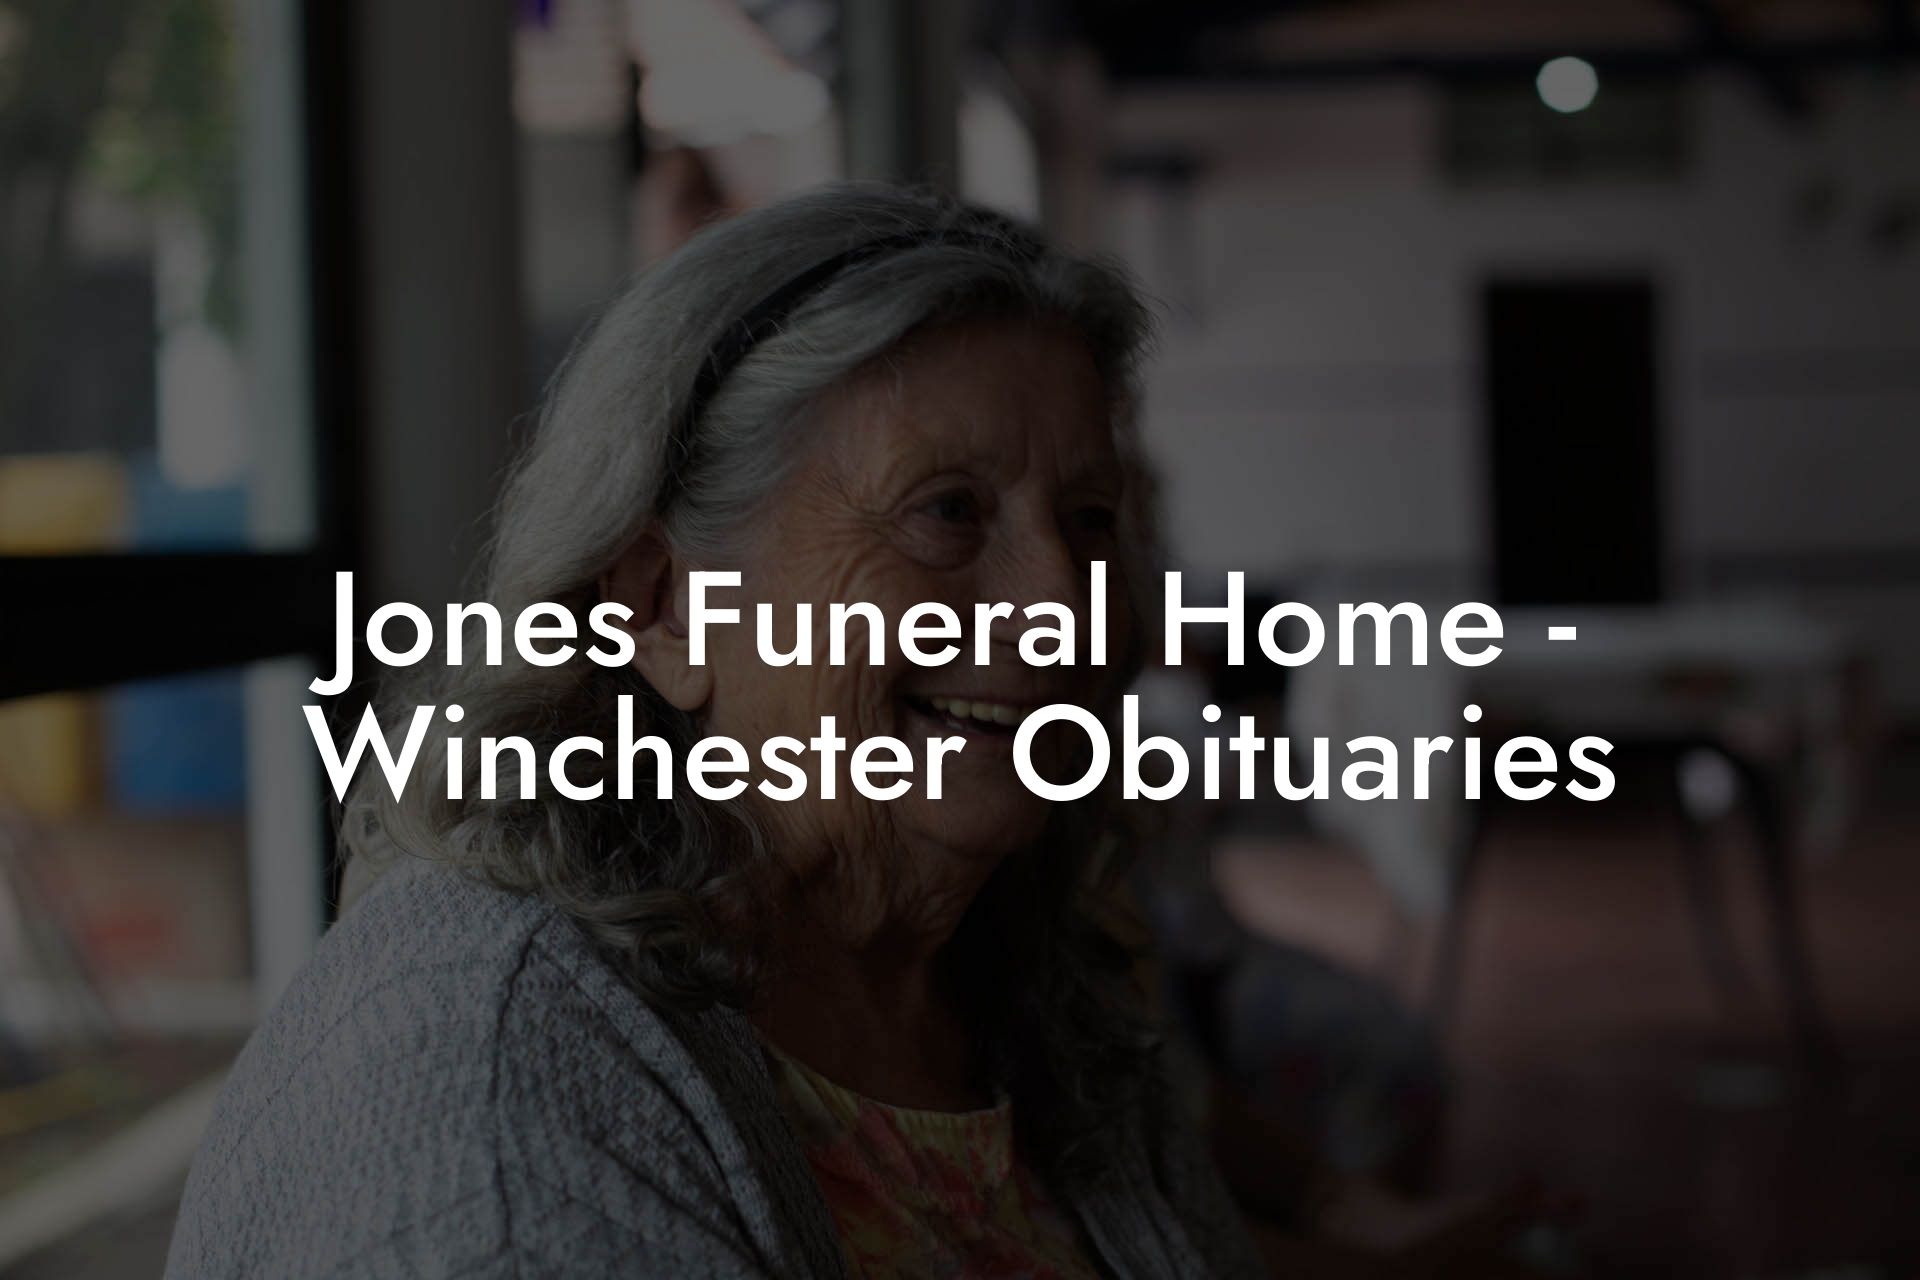 Jones Funeral Home - Winchester Obituaries